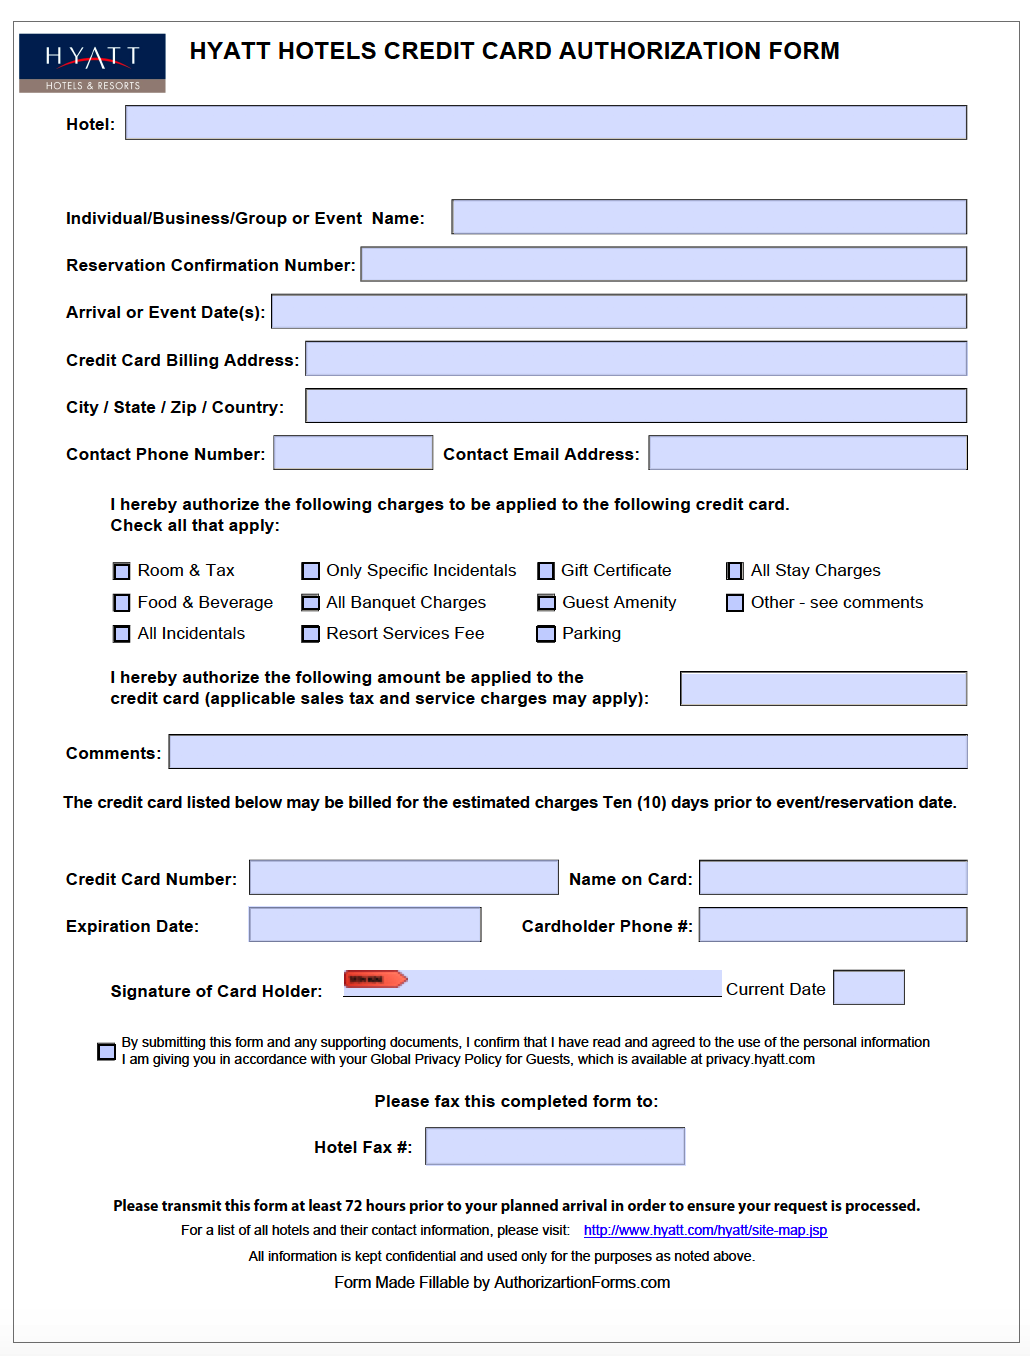 Free Hyatt Hotel Credit Card Authorization Form PDF